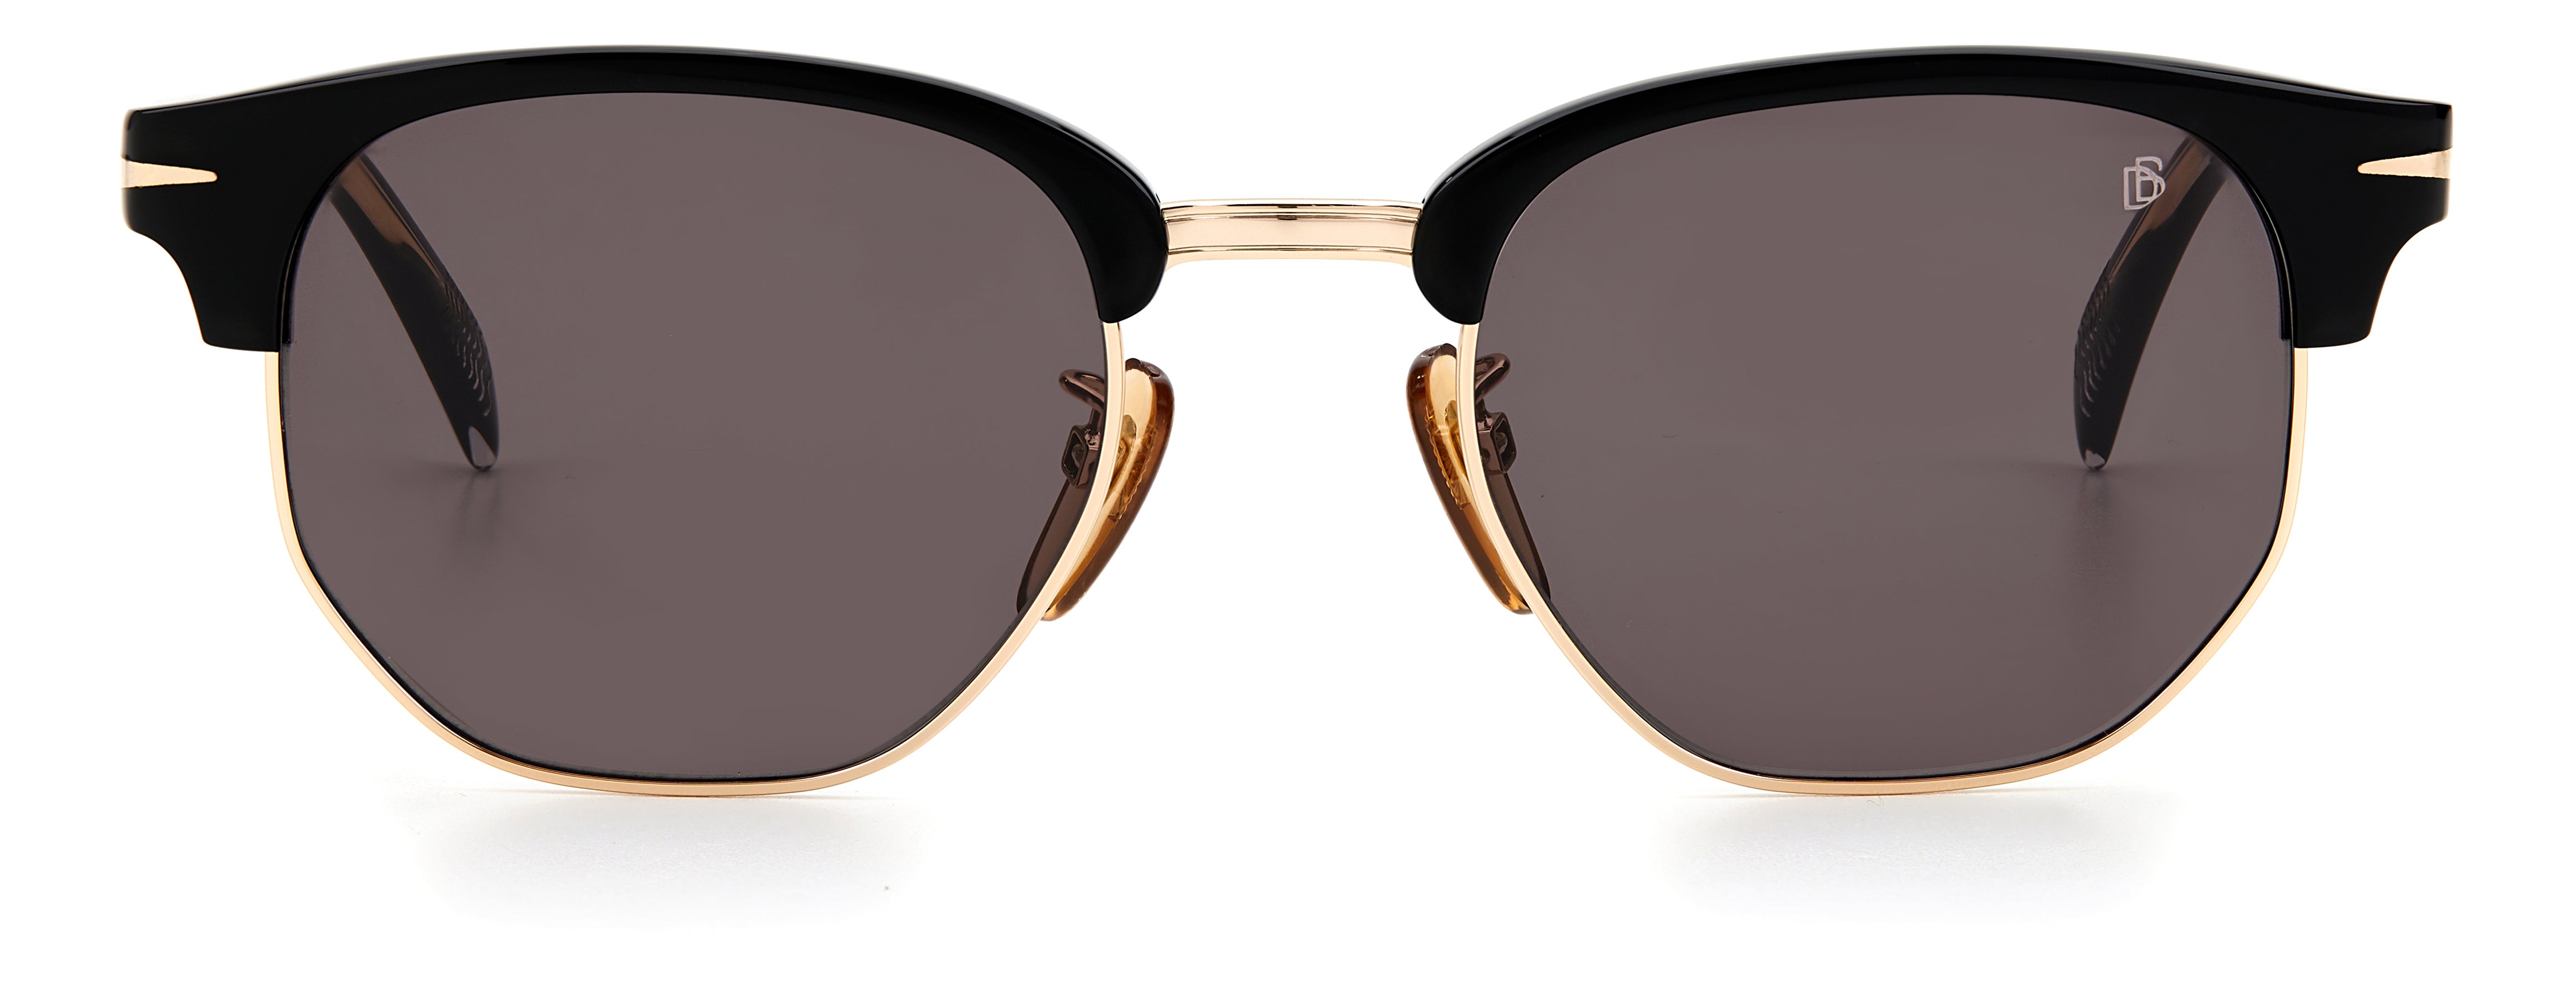 David Beckham Eyewear Clubmaster Sunglasses